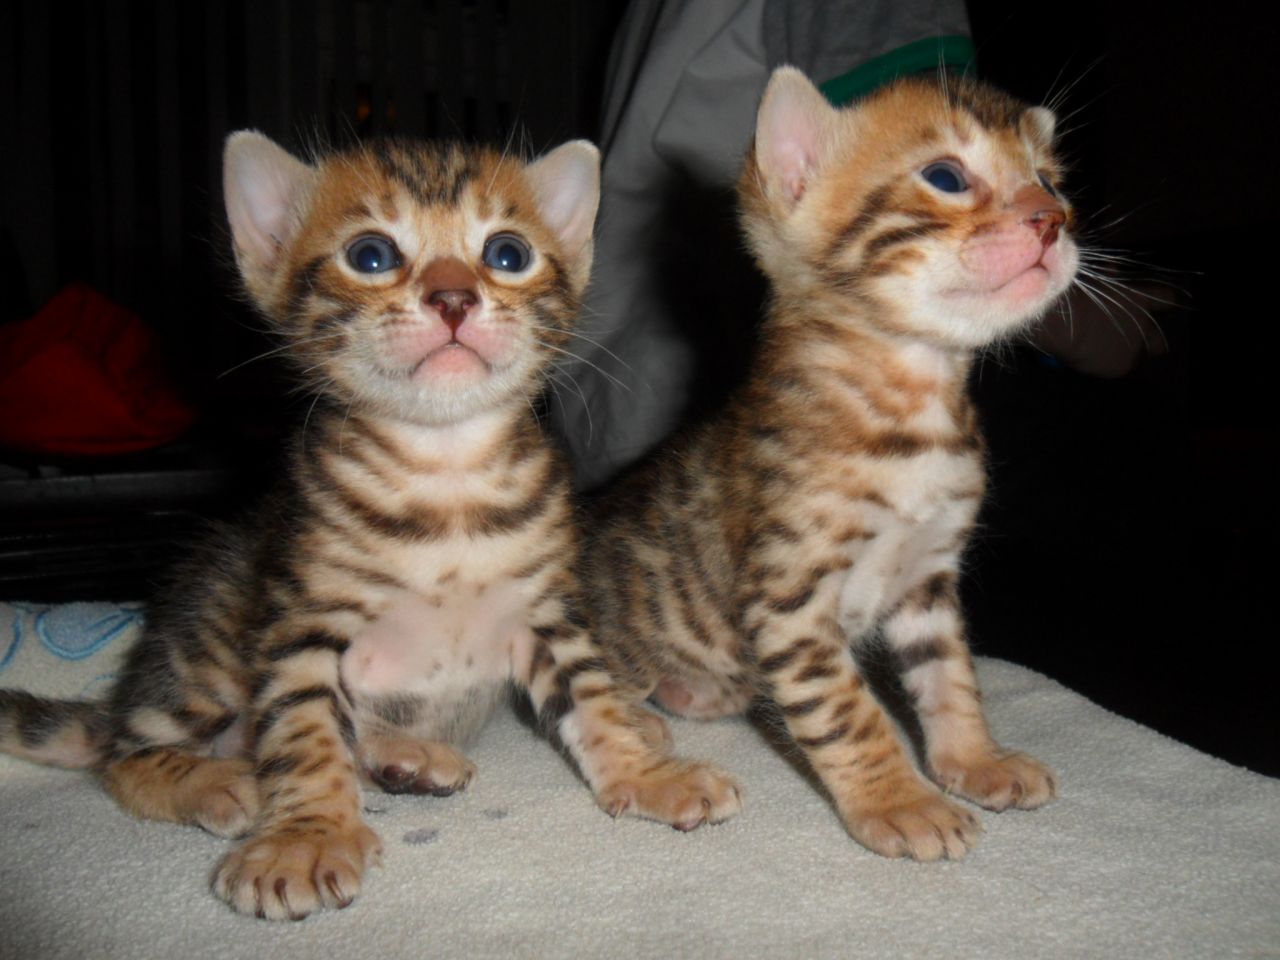  Adorable Bengal kittens 